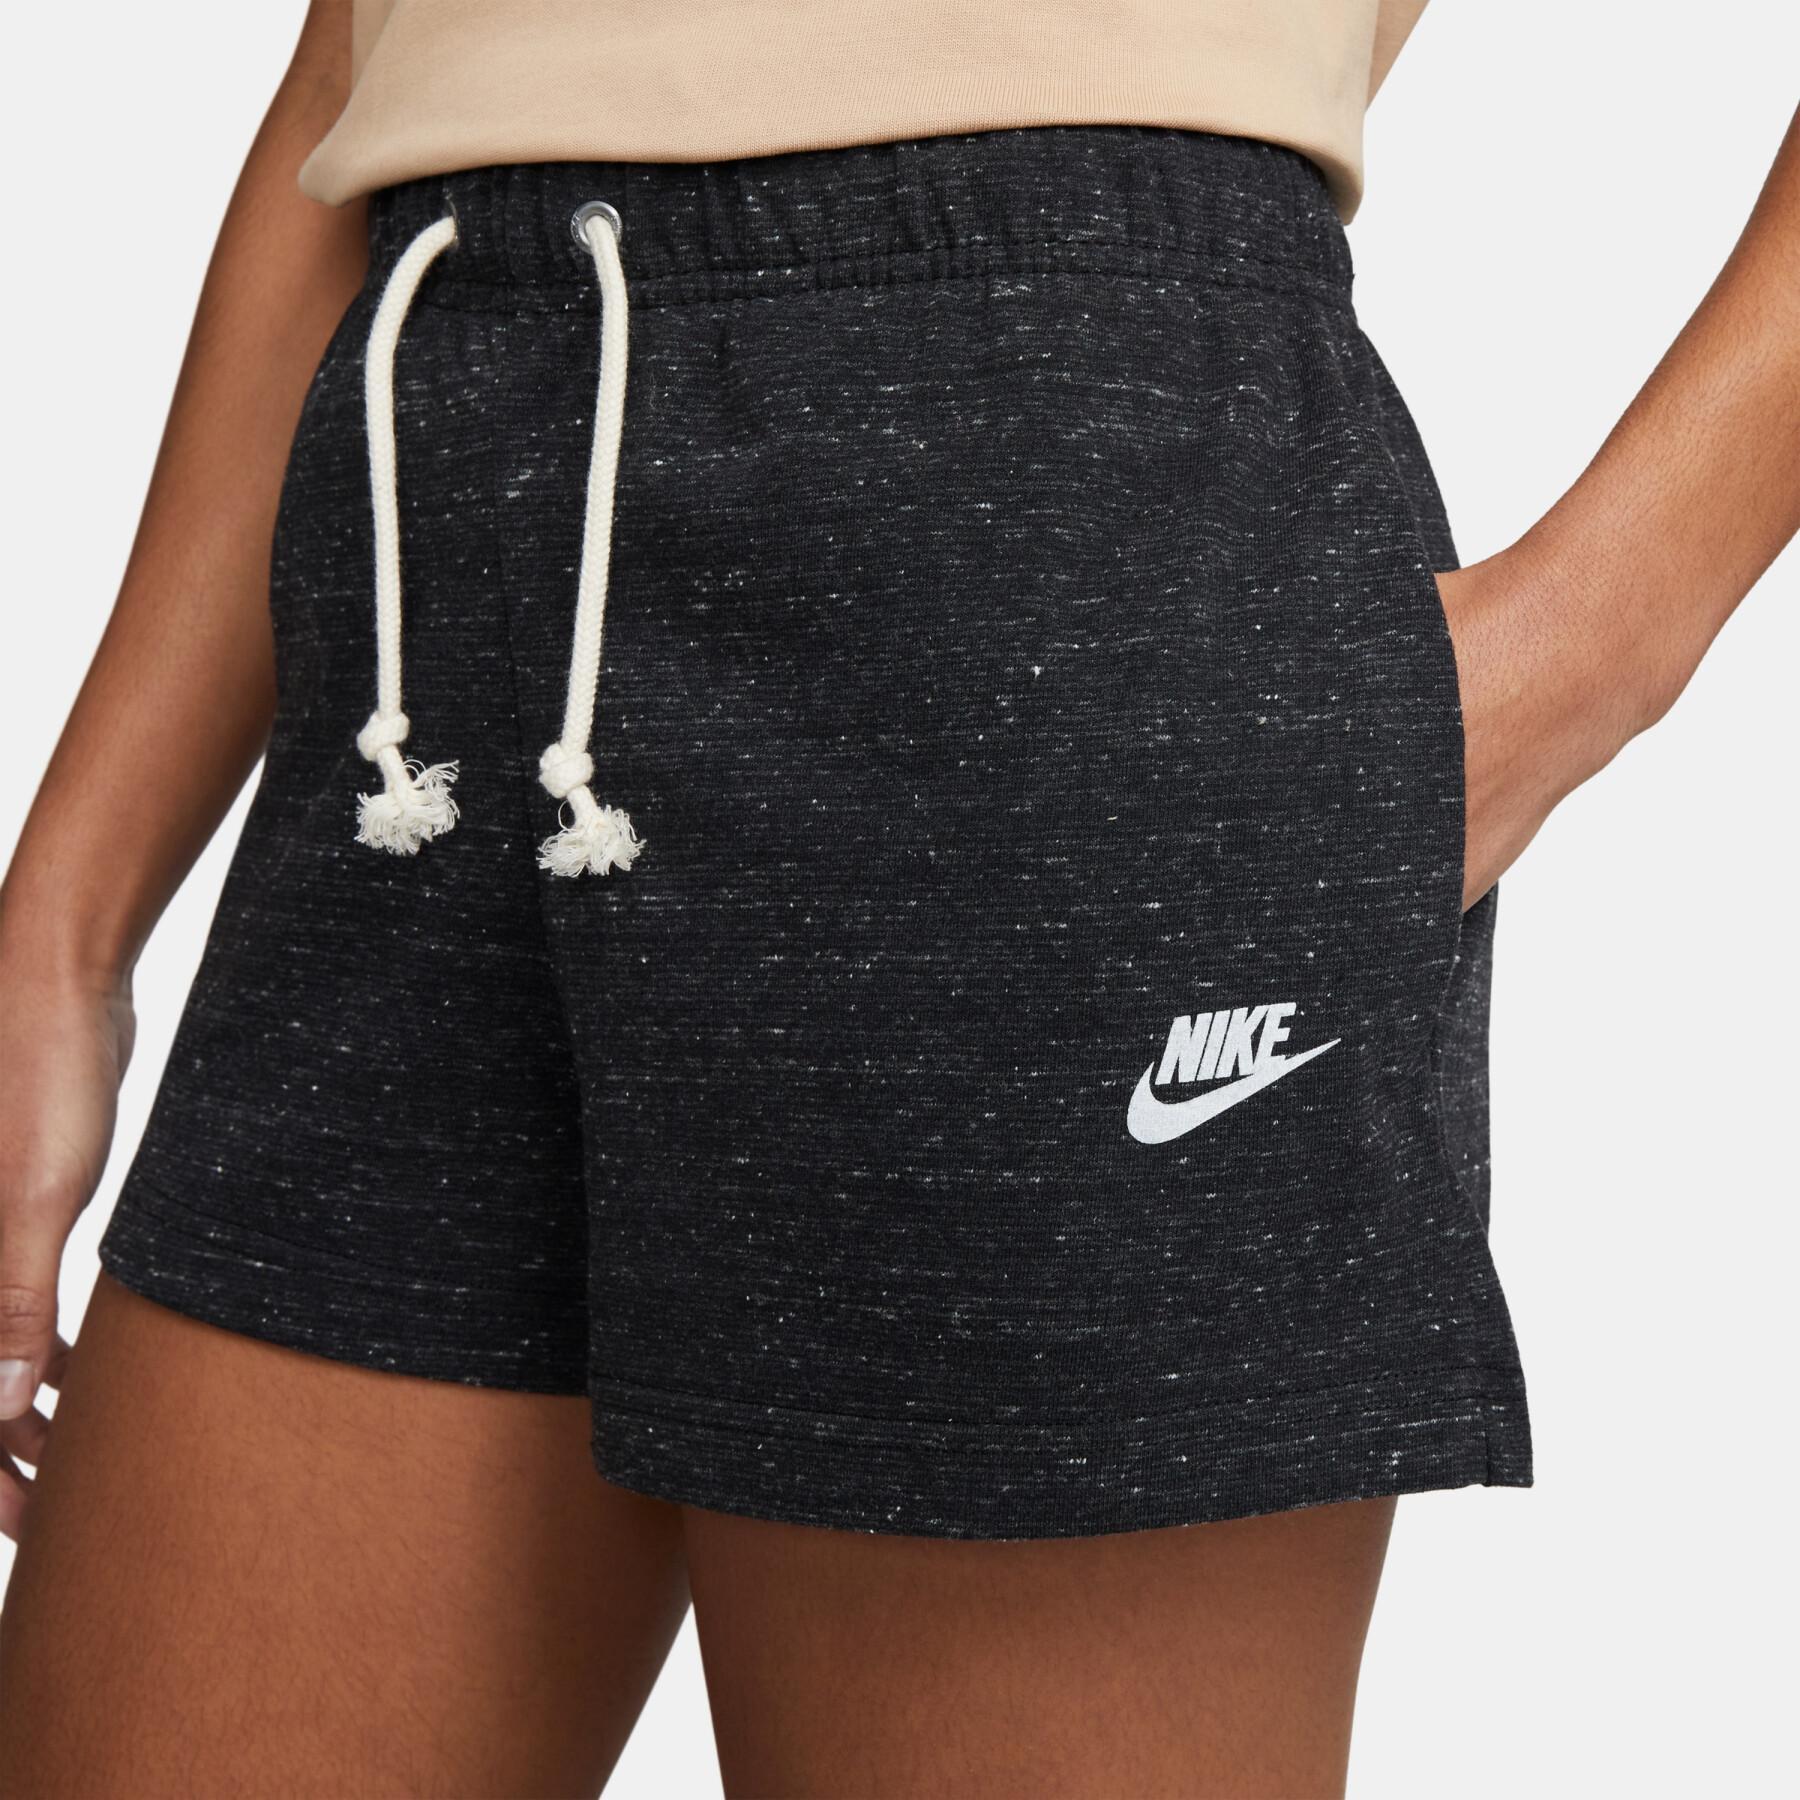 Calções para mulheres Nike Sportswear Gym Vintage